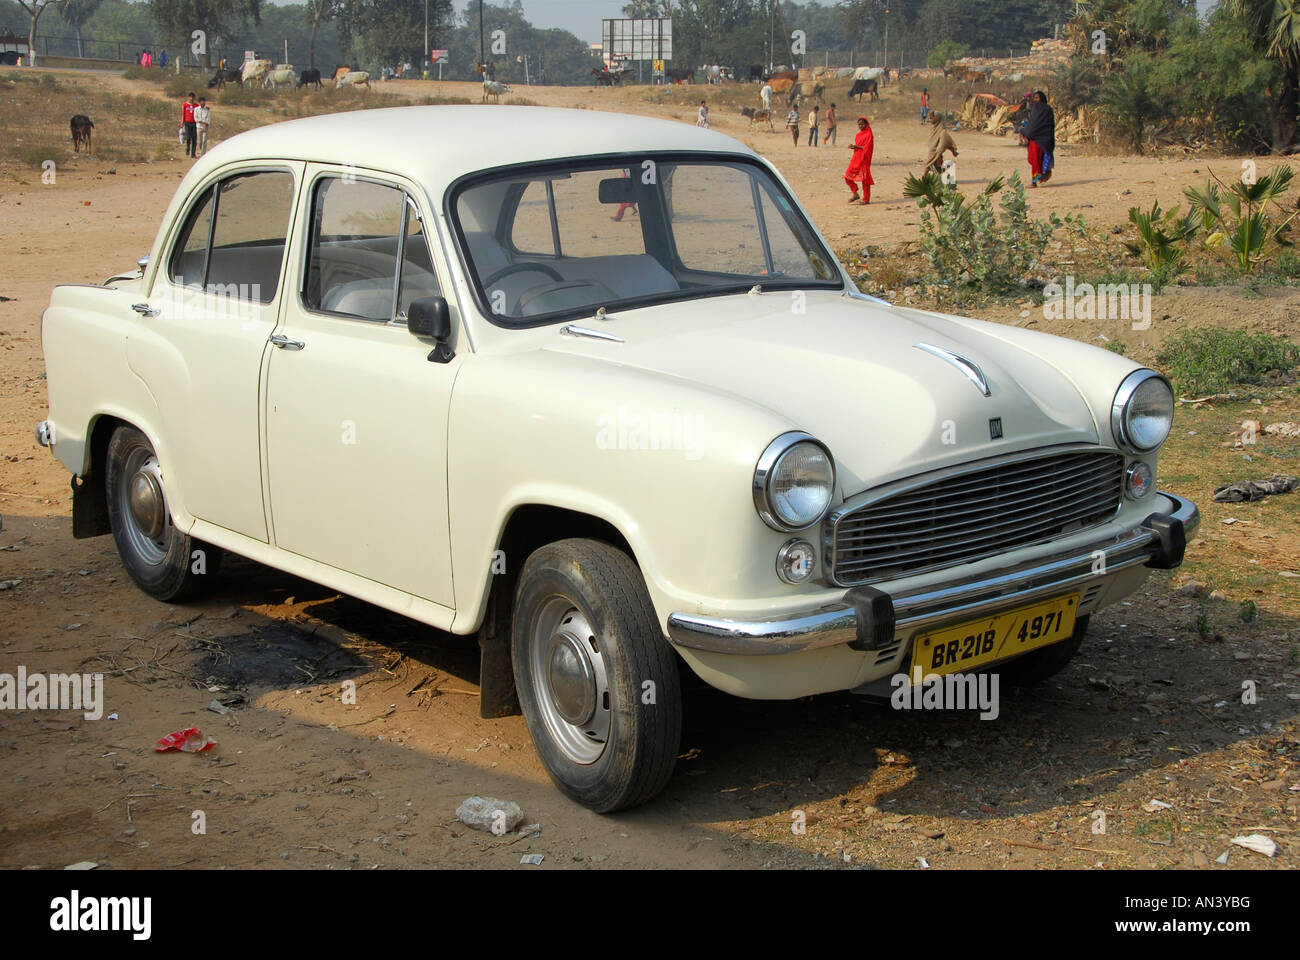 Hindustan Ambassador taxi in India Stock Photo